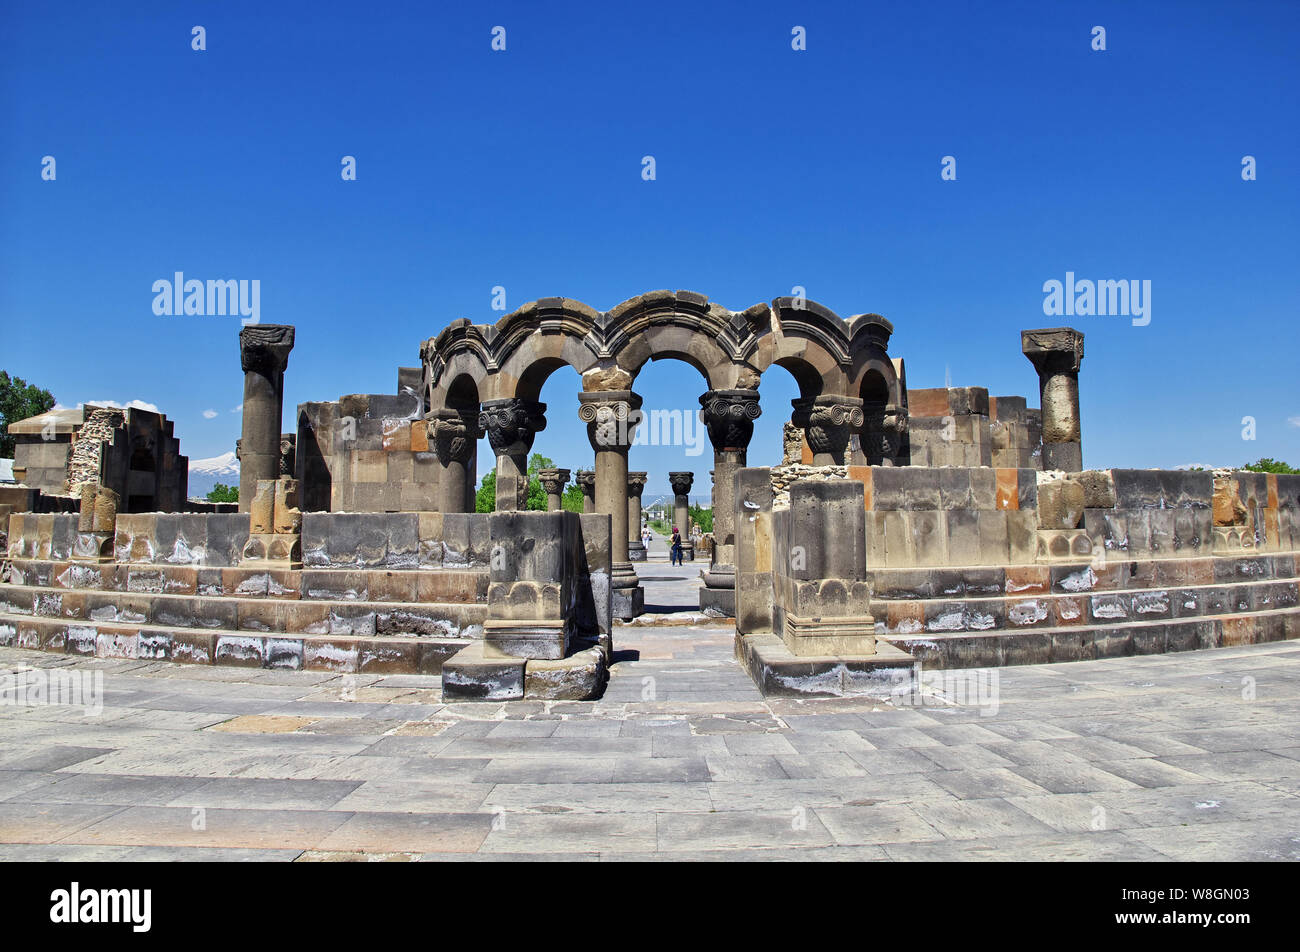 Zvartnots, ruins of ancient temple in Armenia Stock Photo